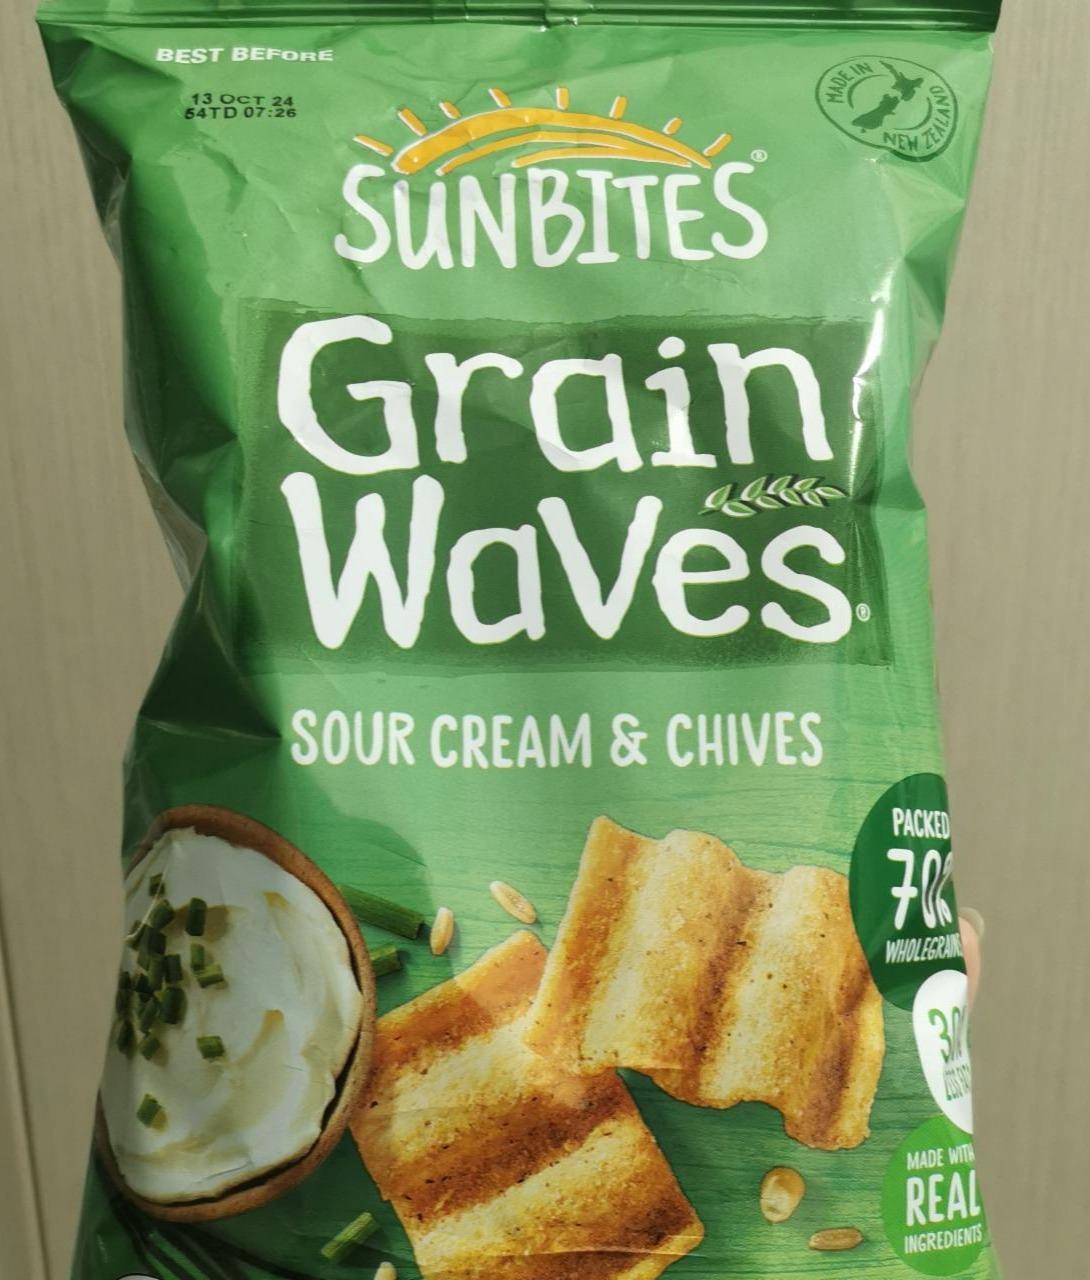 Fotografie - Grain waves sour cream & chives Sunbites